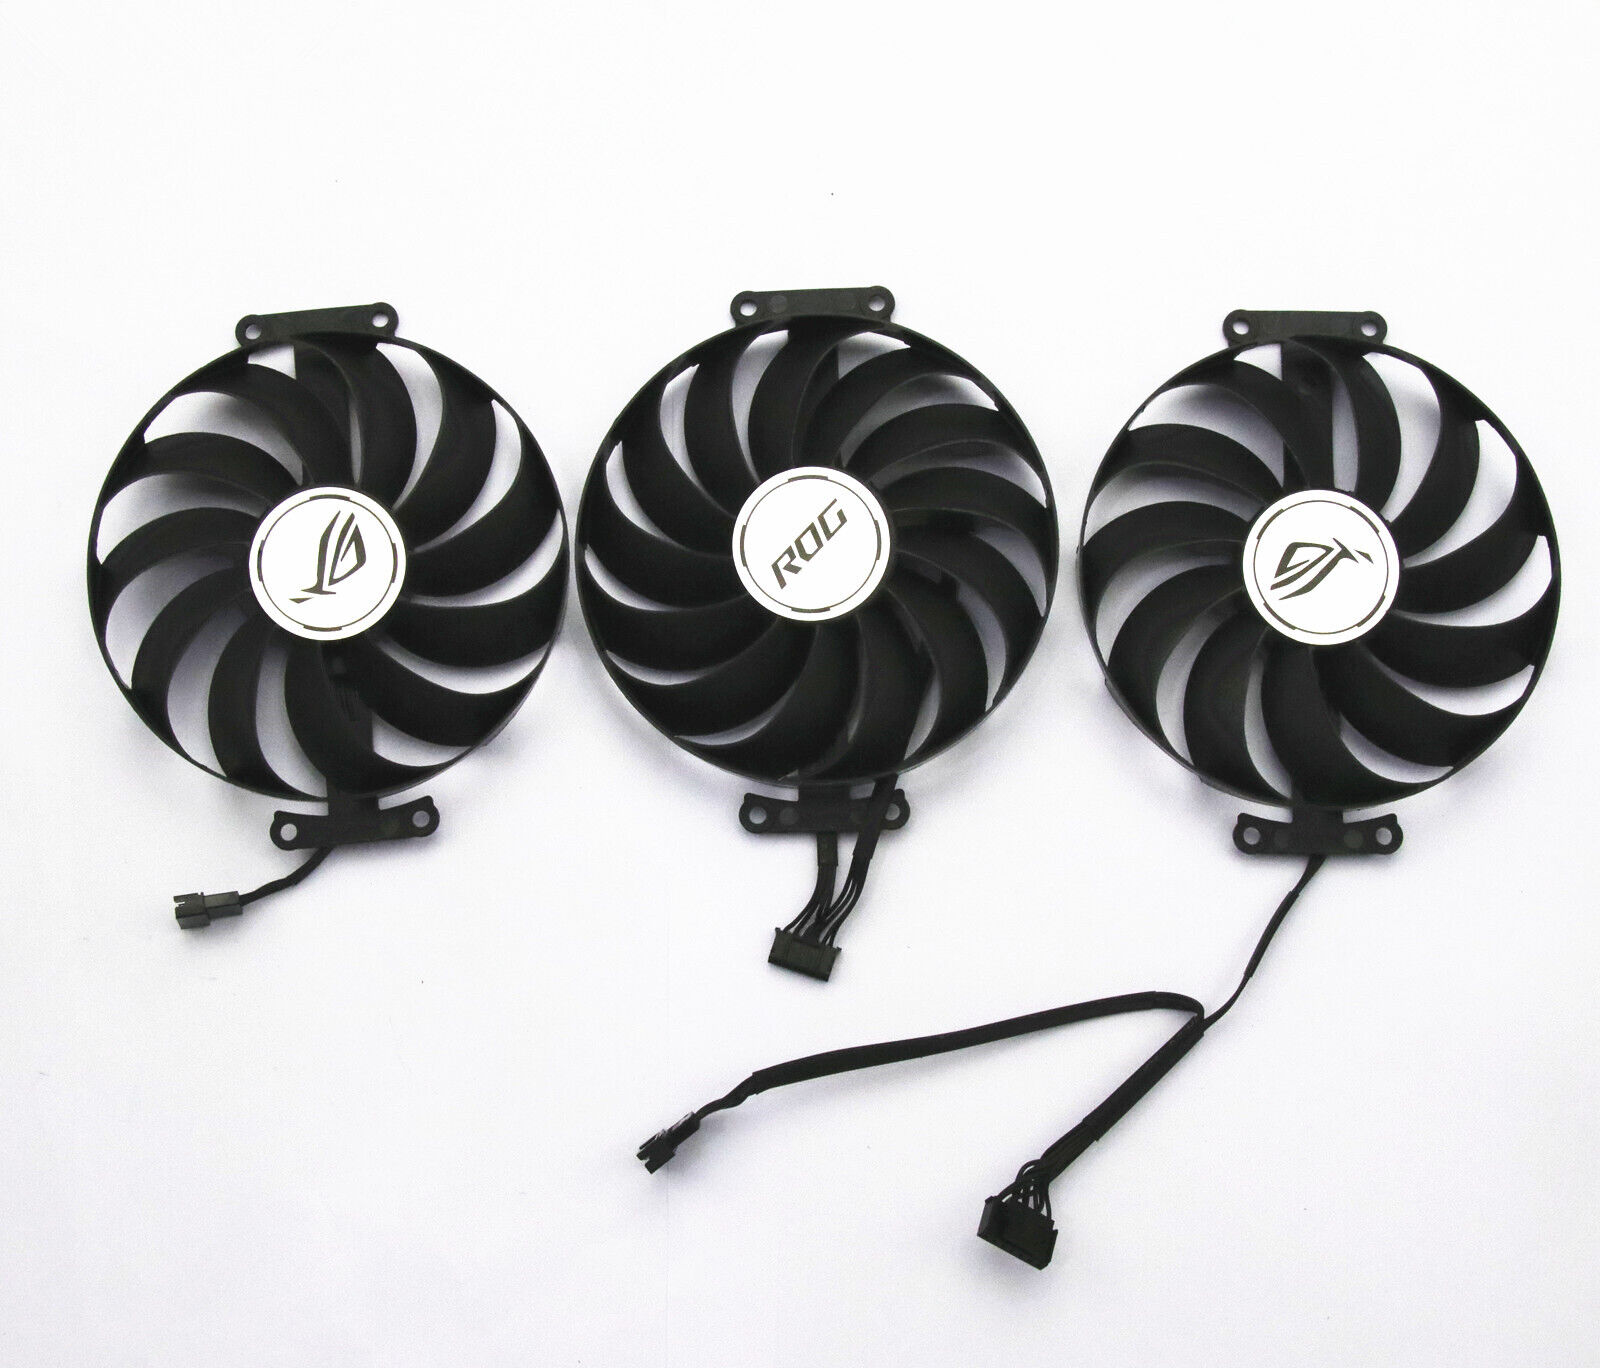 Fan For For ASUS RTX3090 3080 3070 ROG Strix Raptor GPU Cooler Fan DC T129215SU